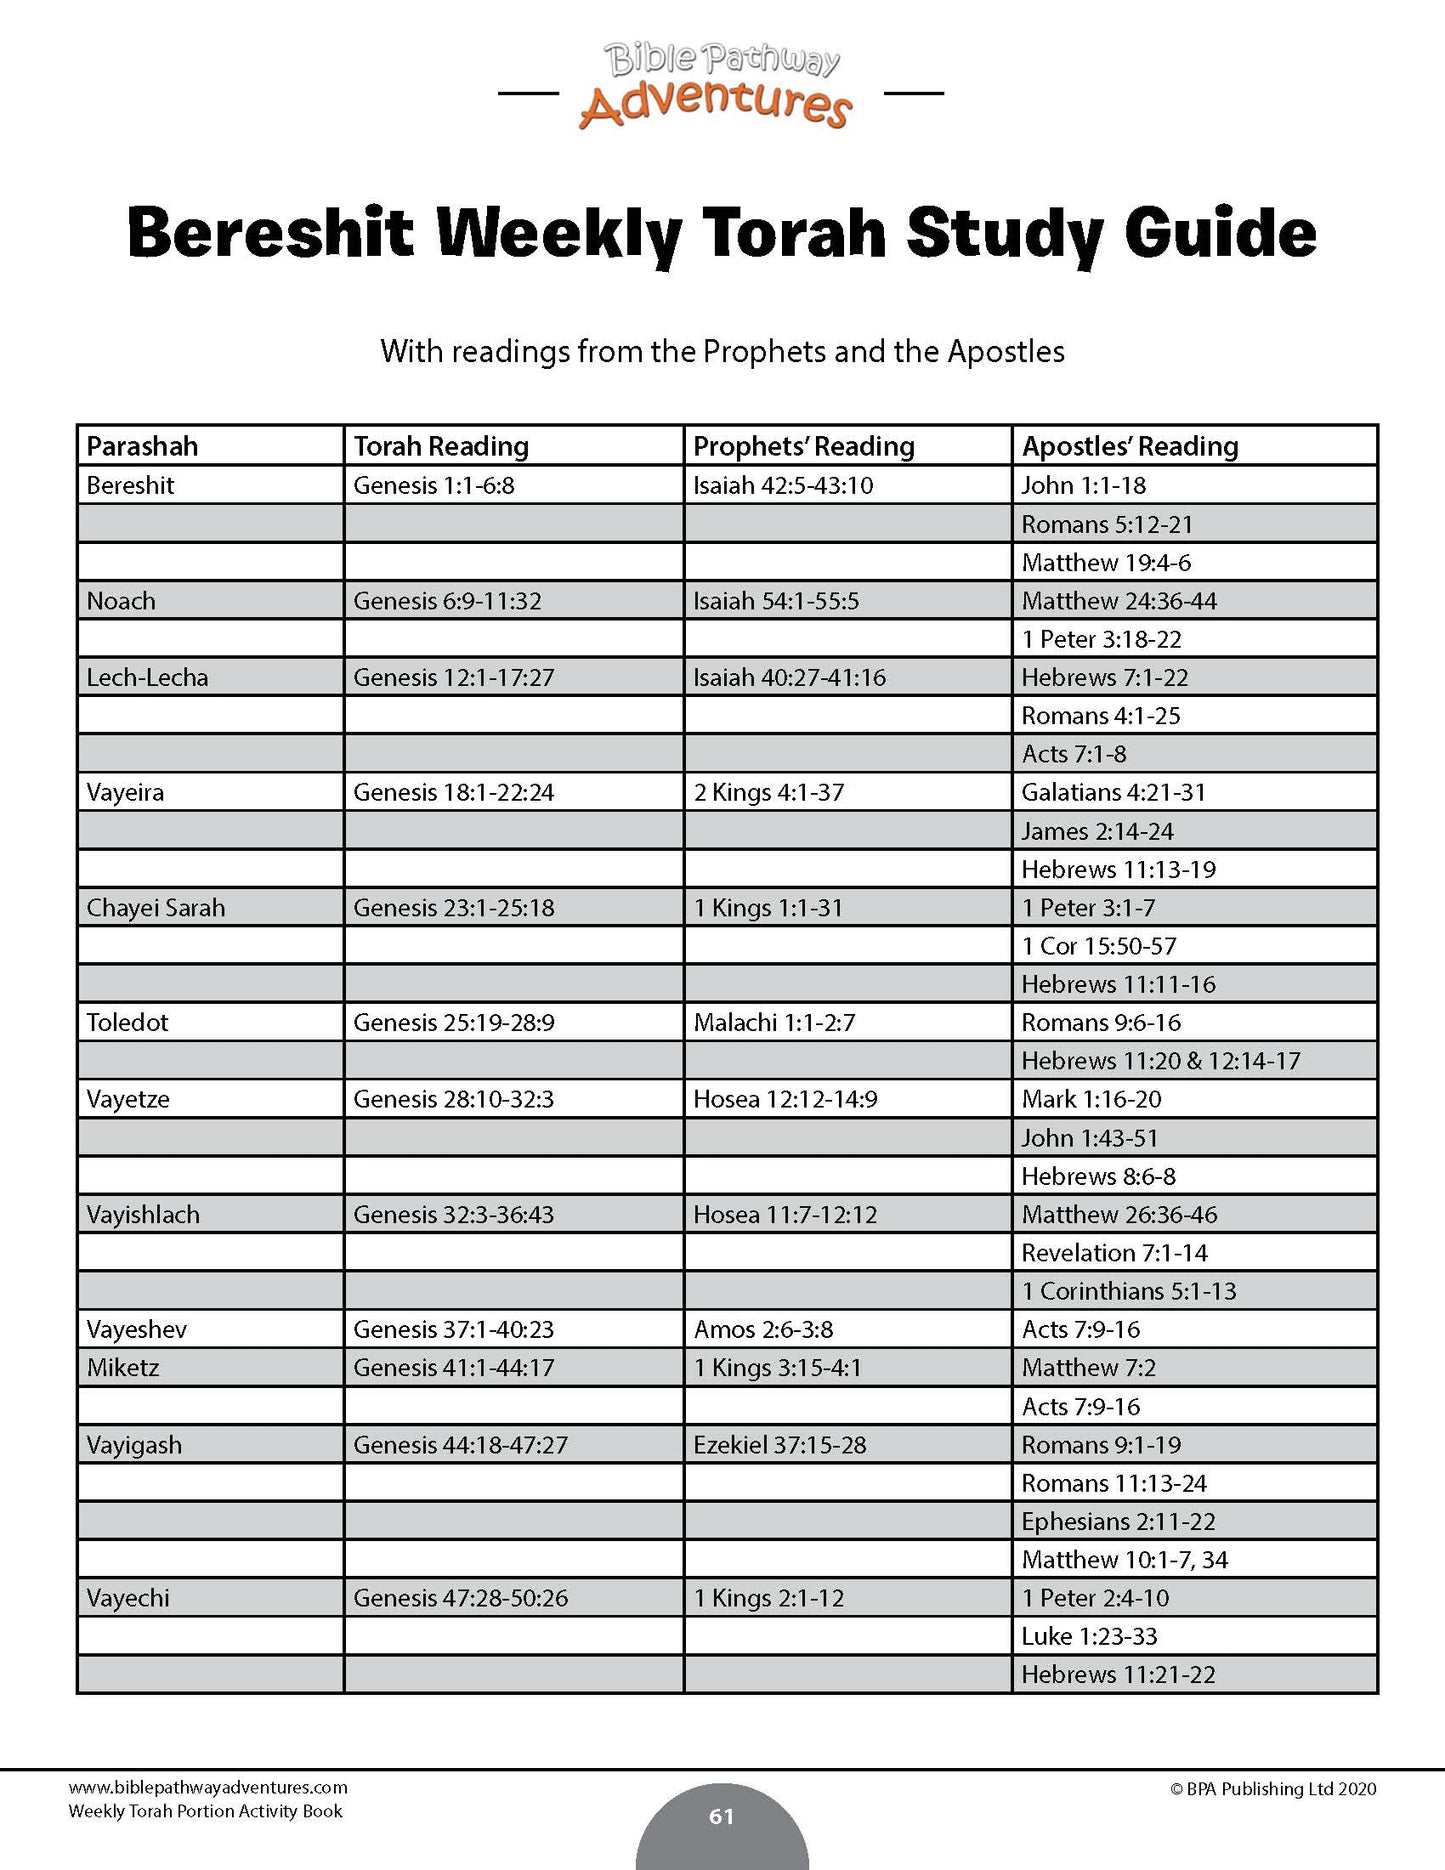 Weekly Torah Portion Activity Book (PDF)